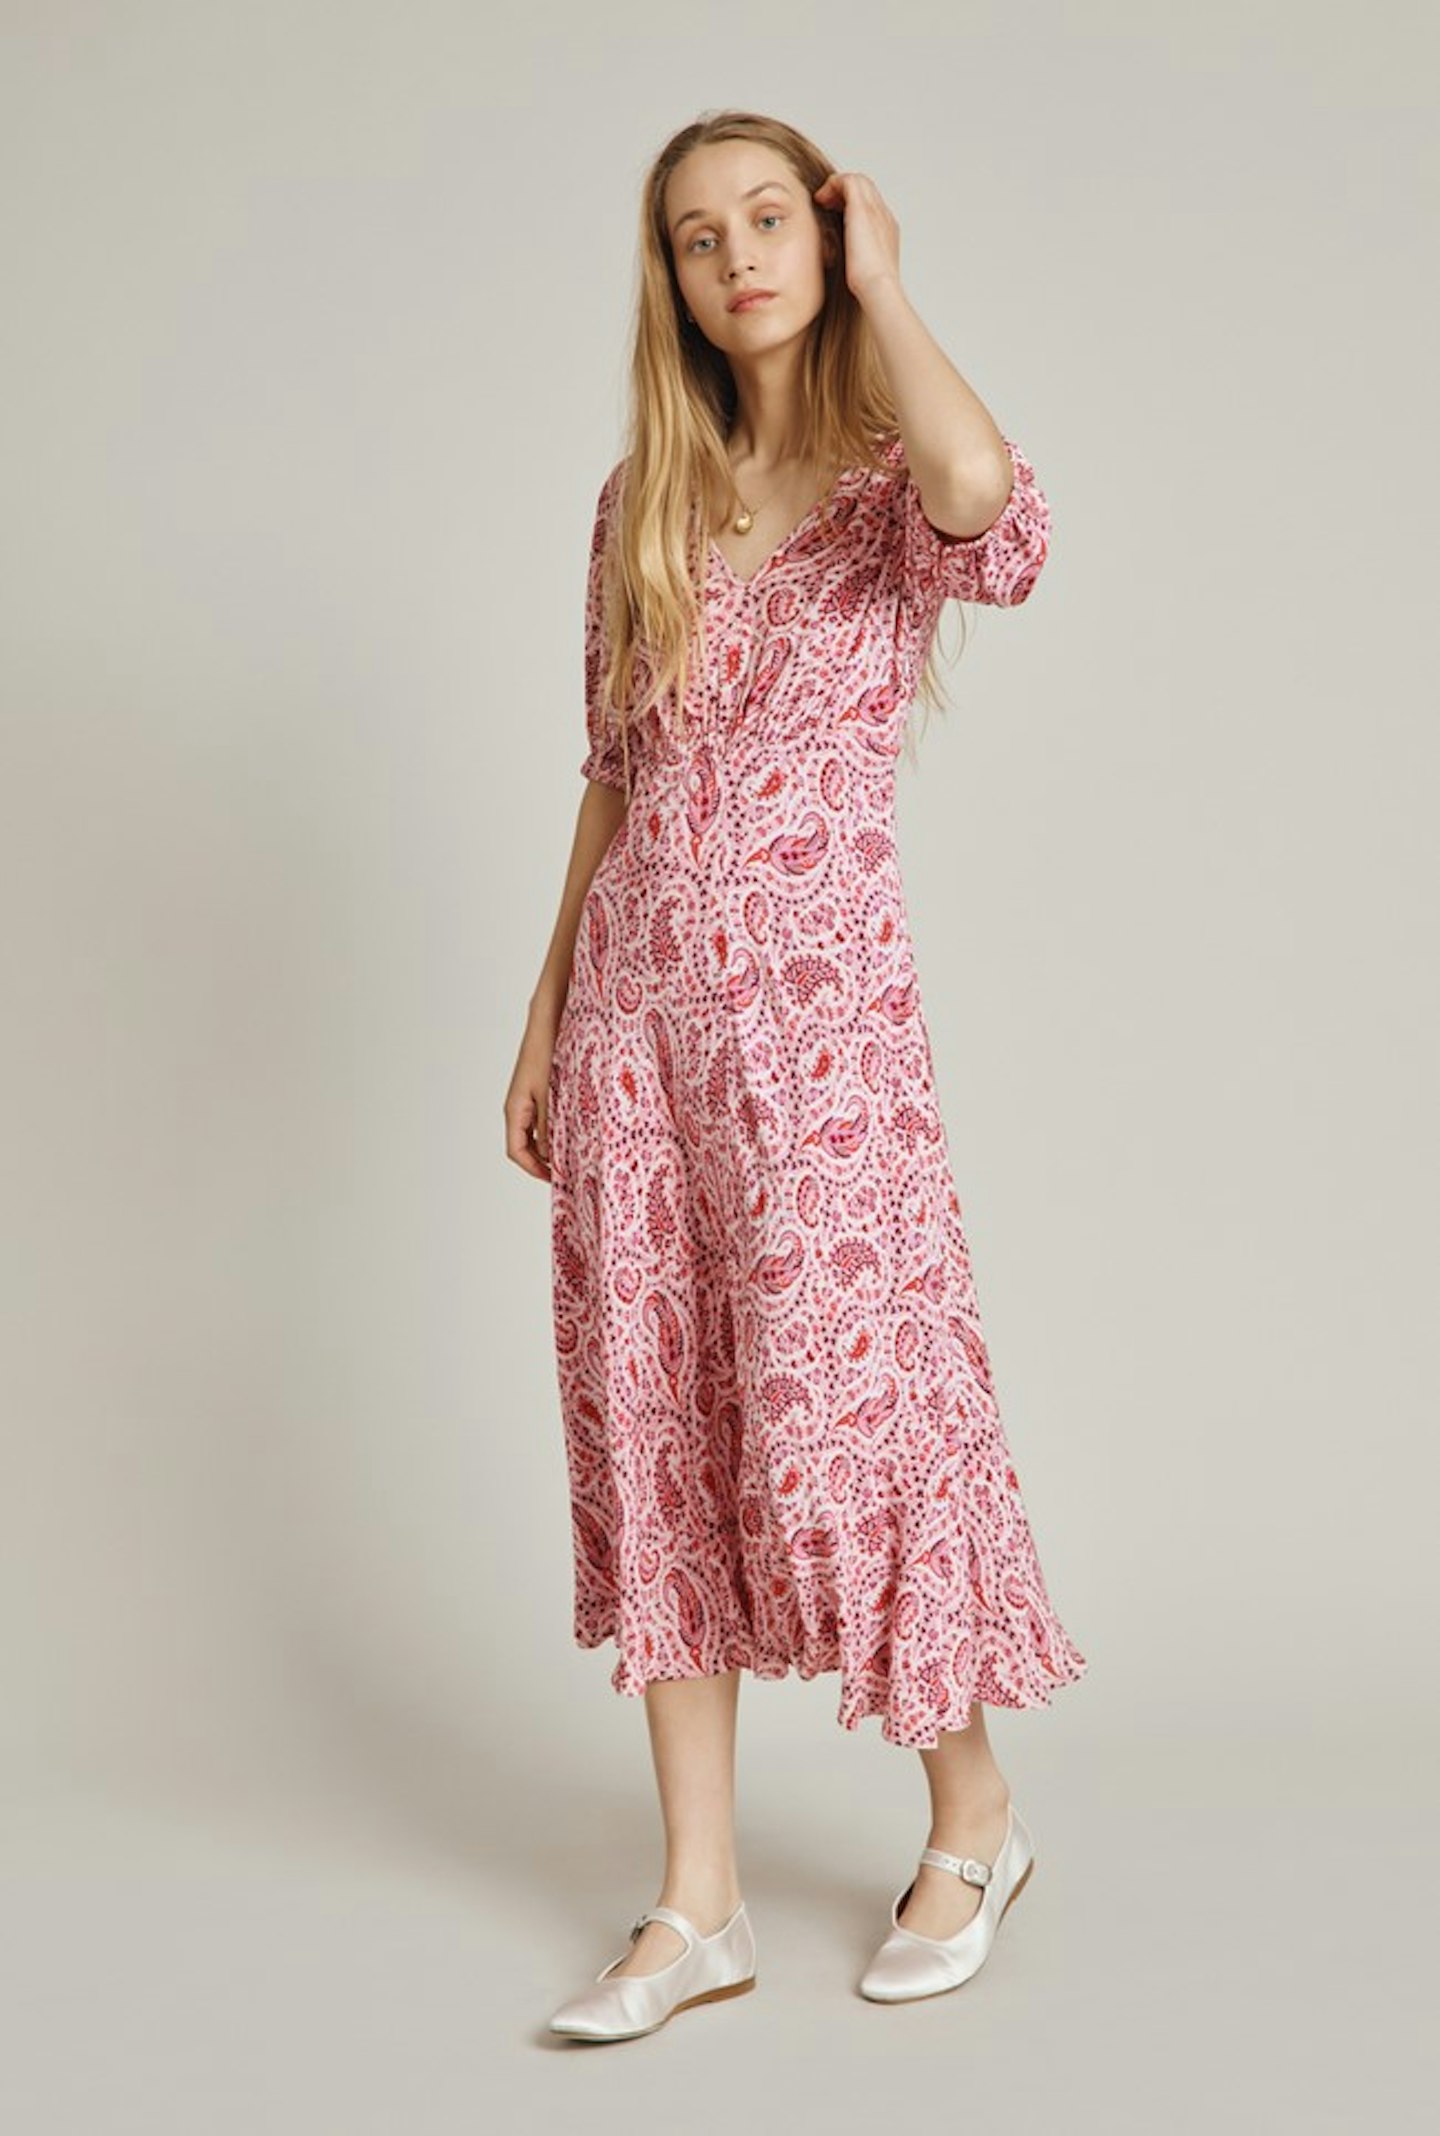 Ghost, Petra Dress Pink Paisley, £129